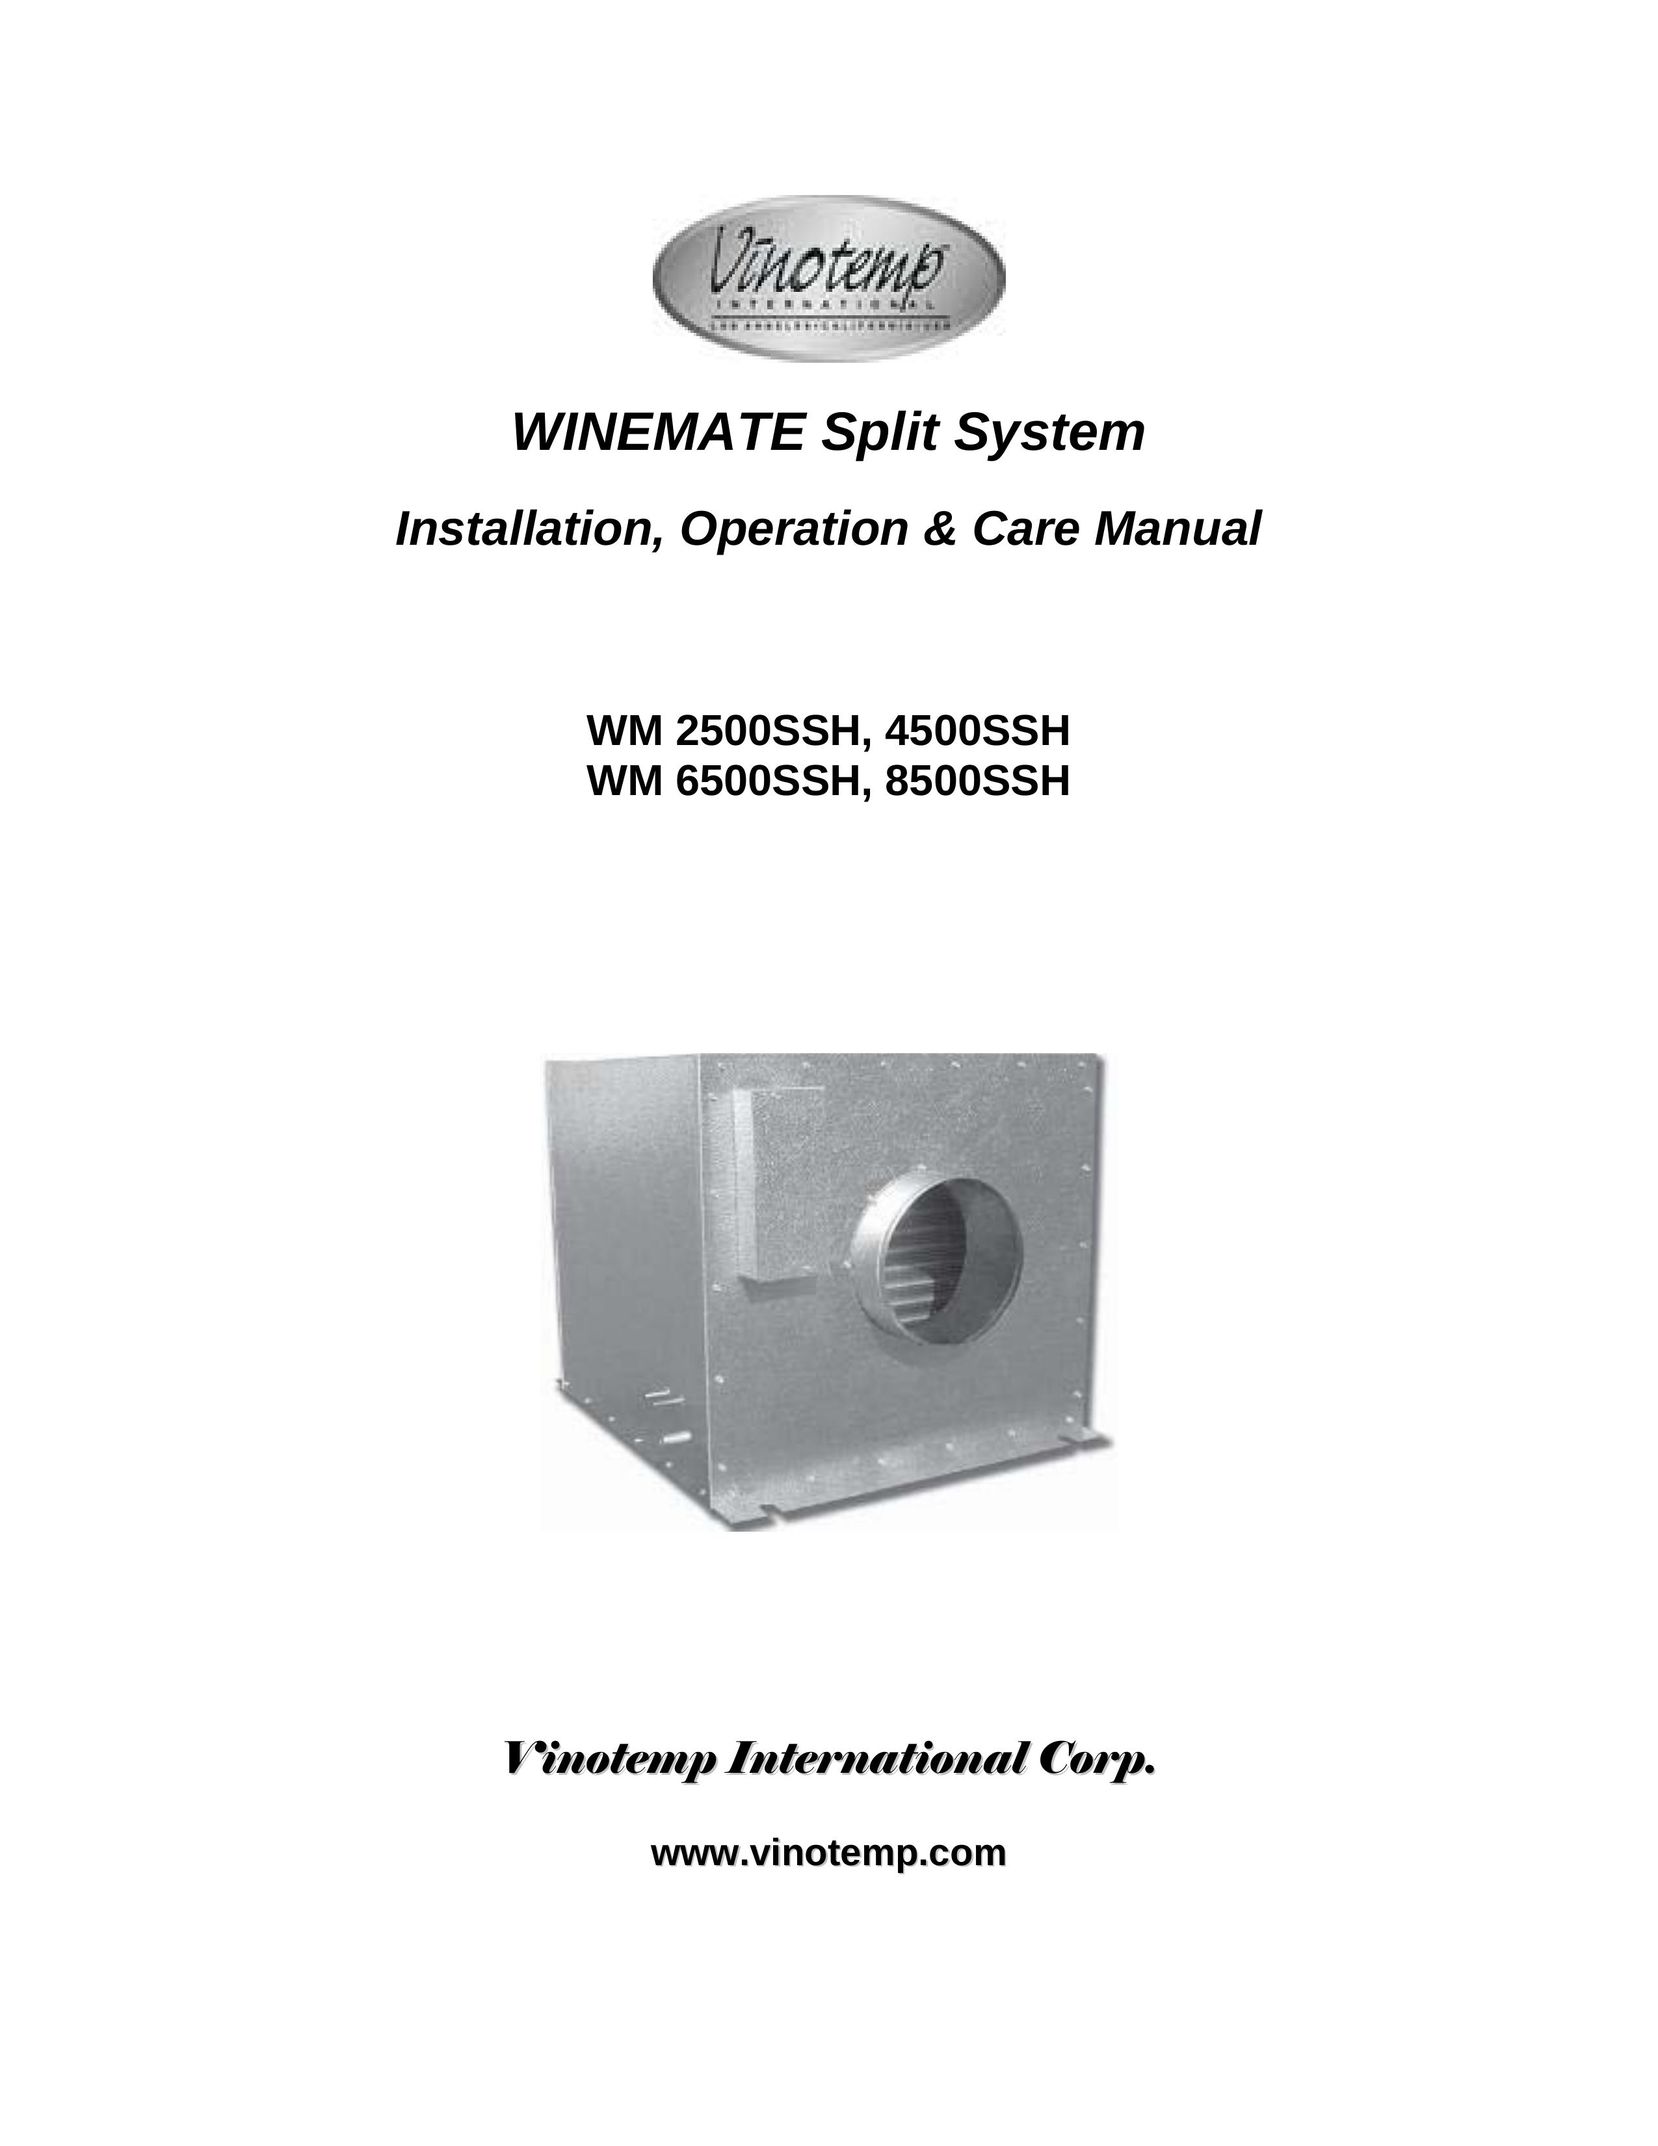 Vinotemp WM 6500SSH Air Conditioner User Manual